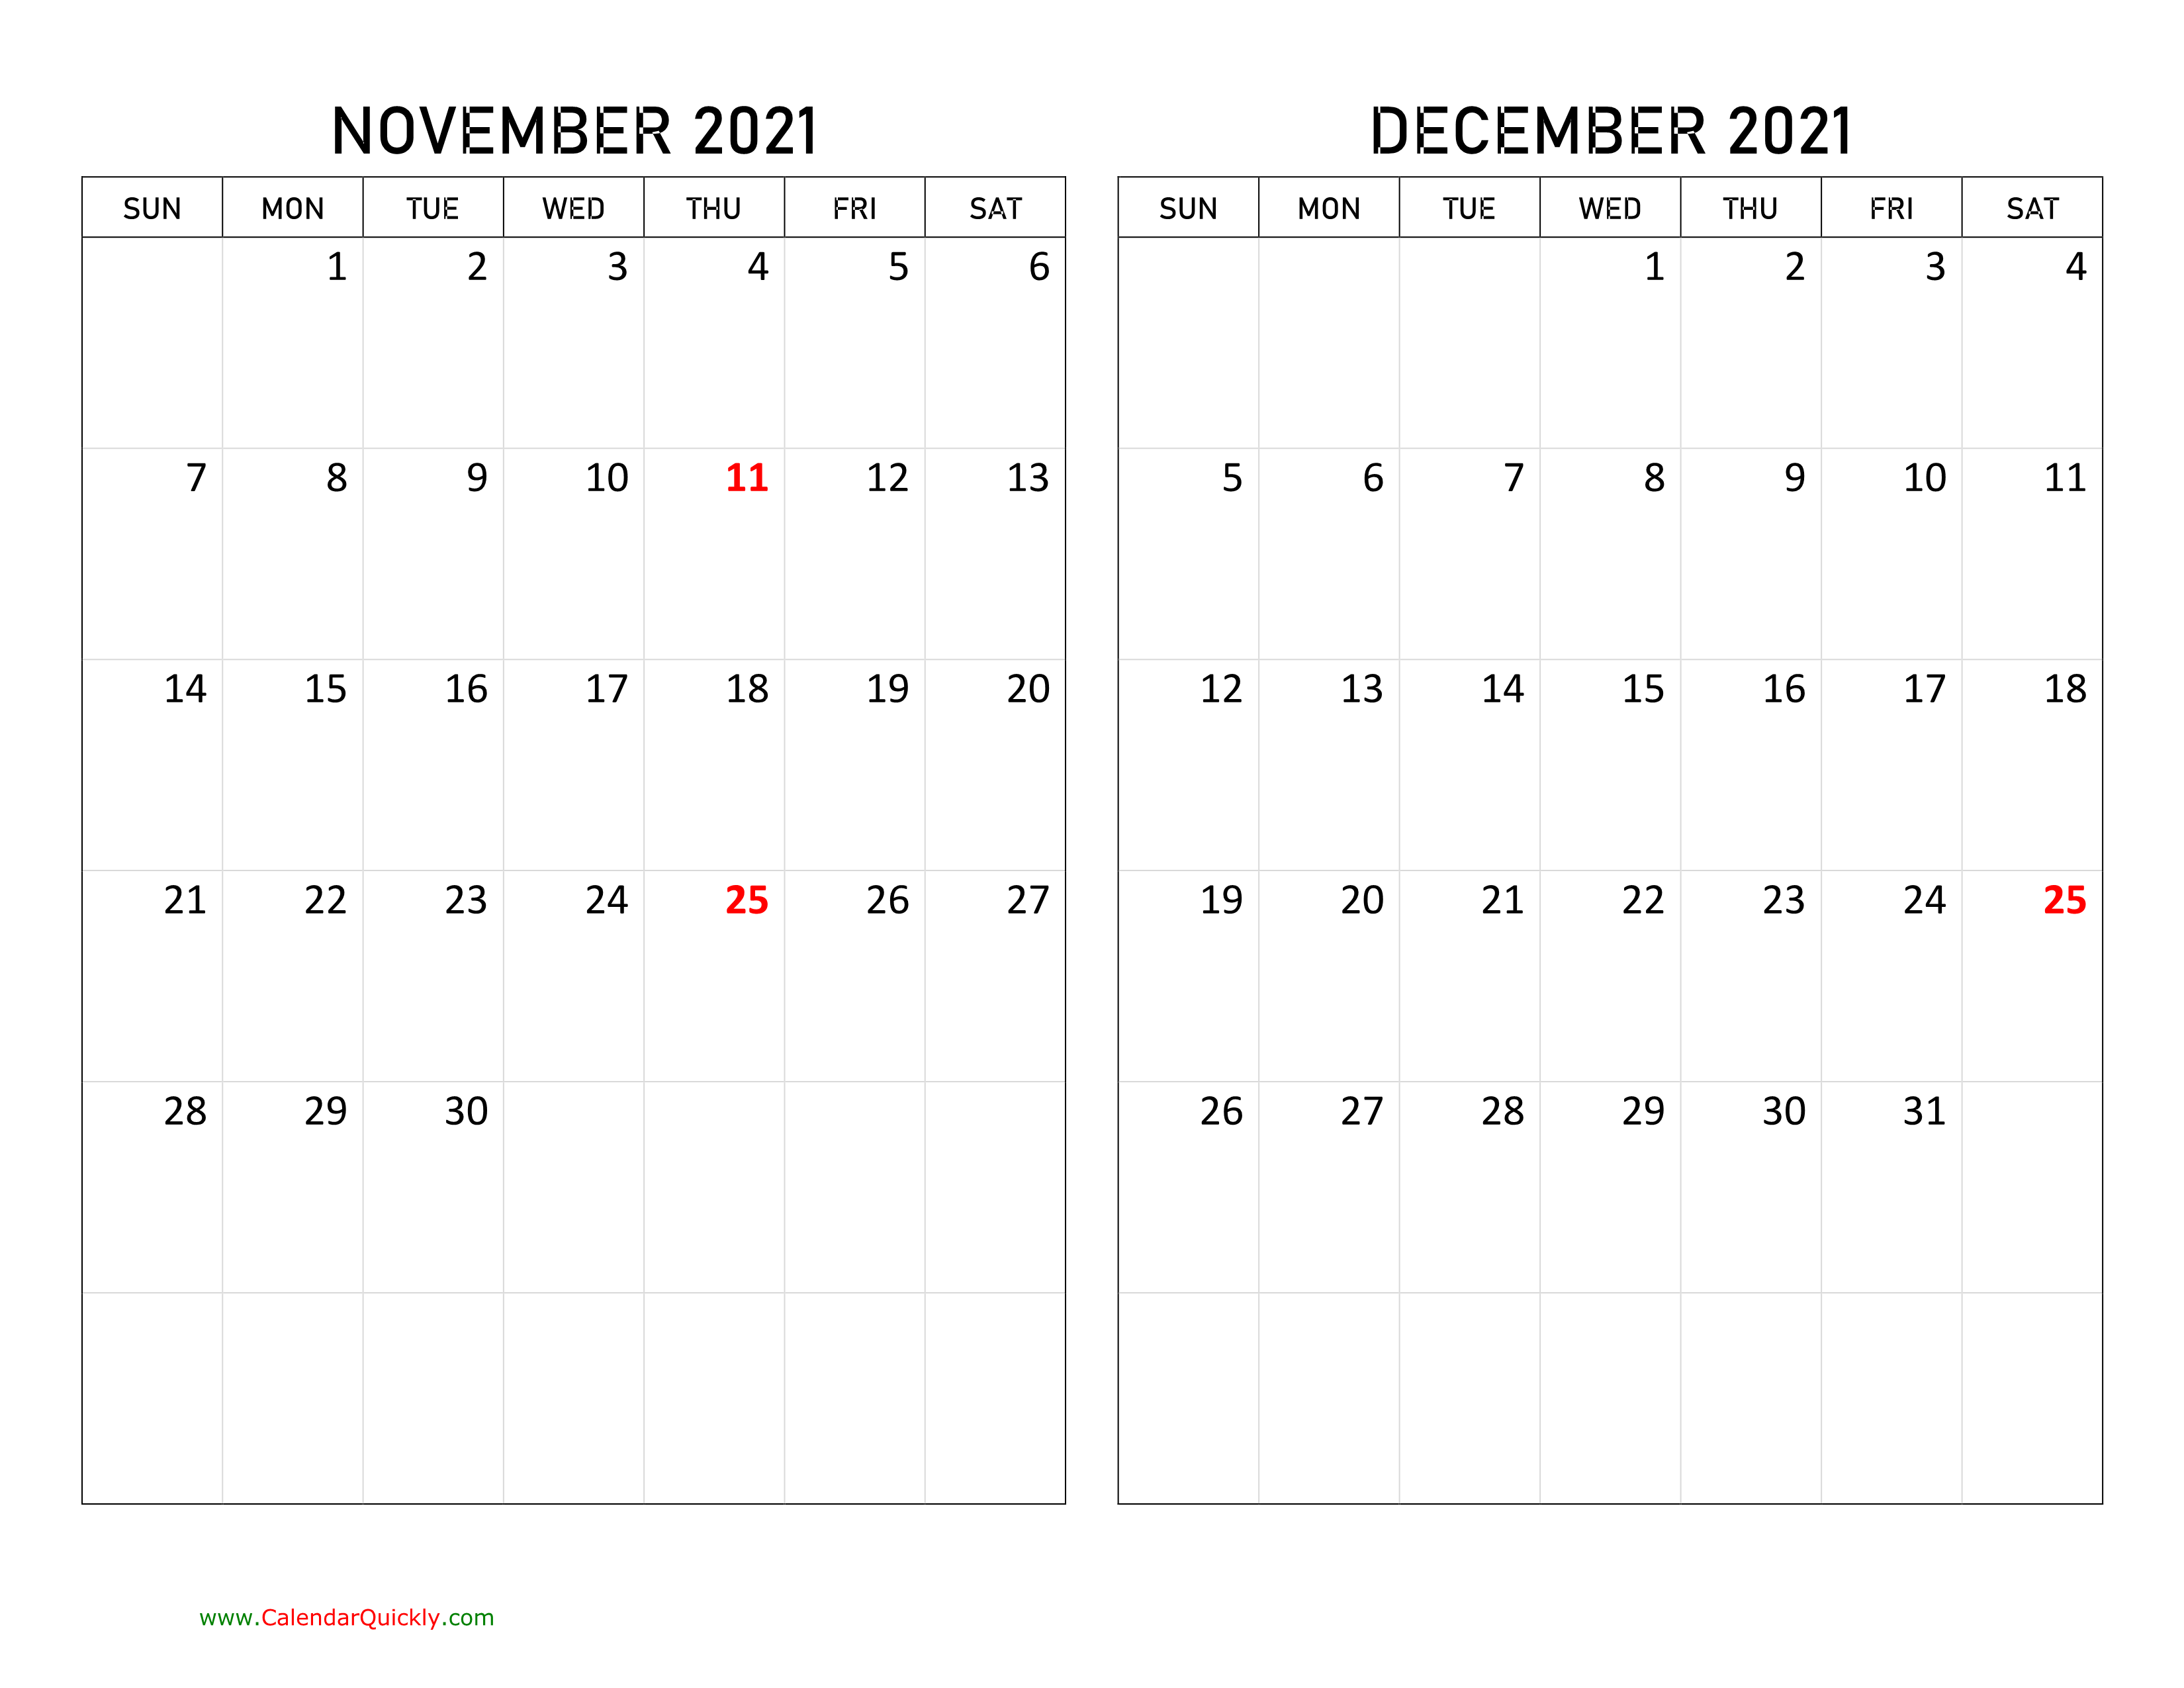 November and December 2021 Calendar Calendar Quickly